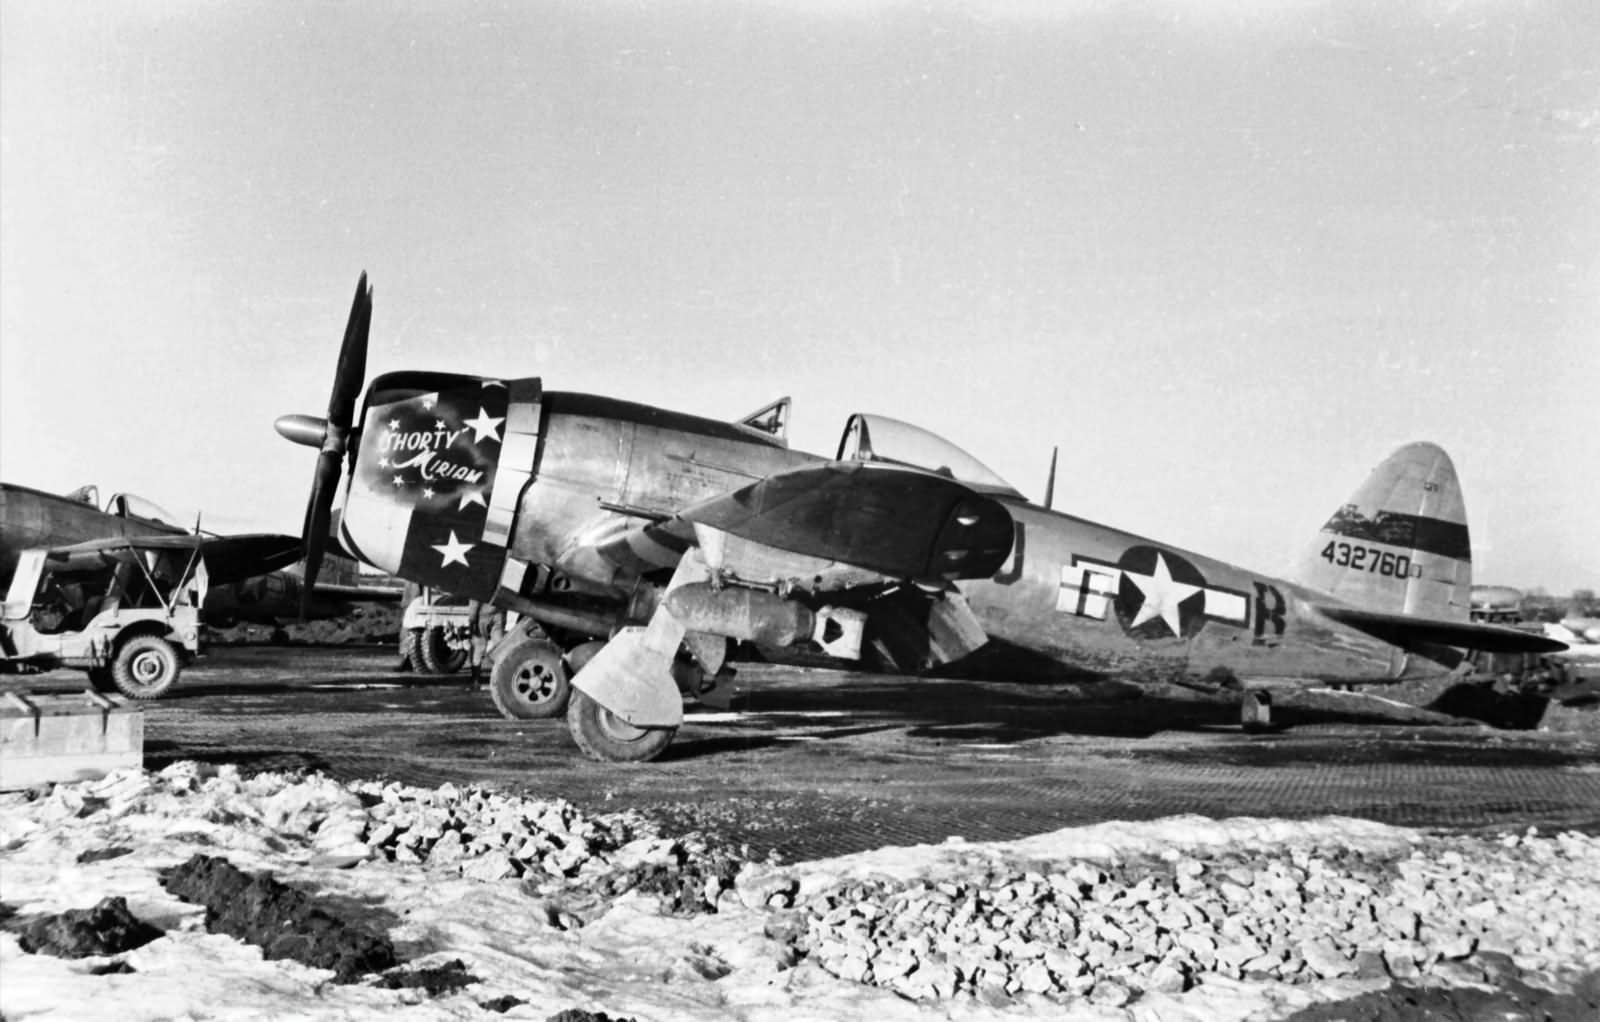 P-47D-30_Thunderbolt_354th_FG_Nose_Art_44-32760.jpg